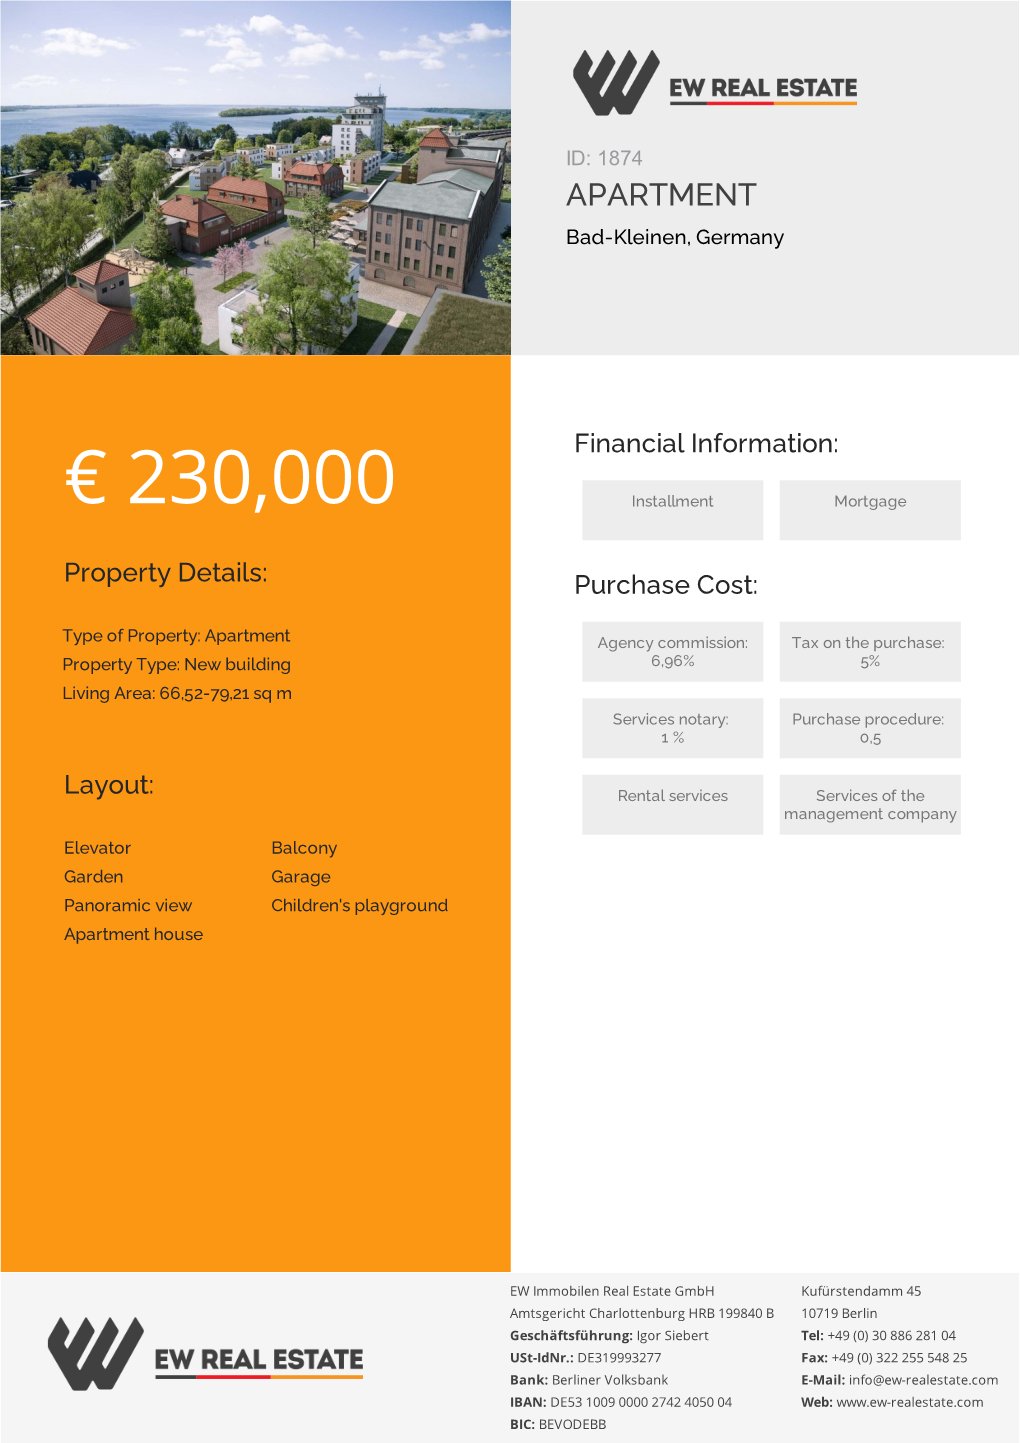 € 230,000 Installment Mortgage